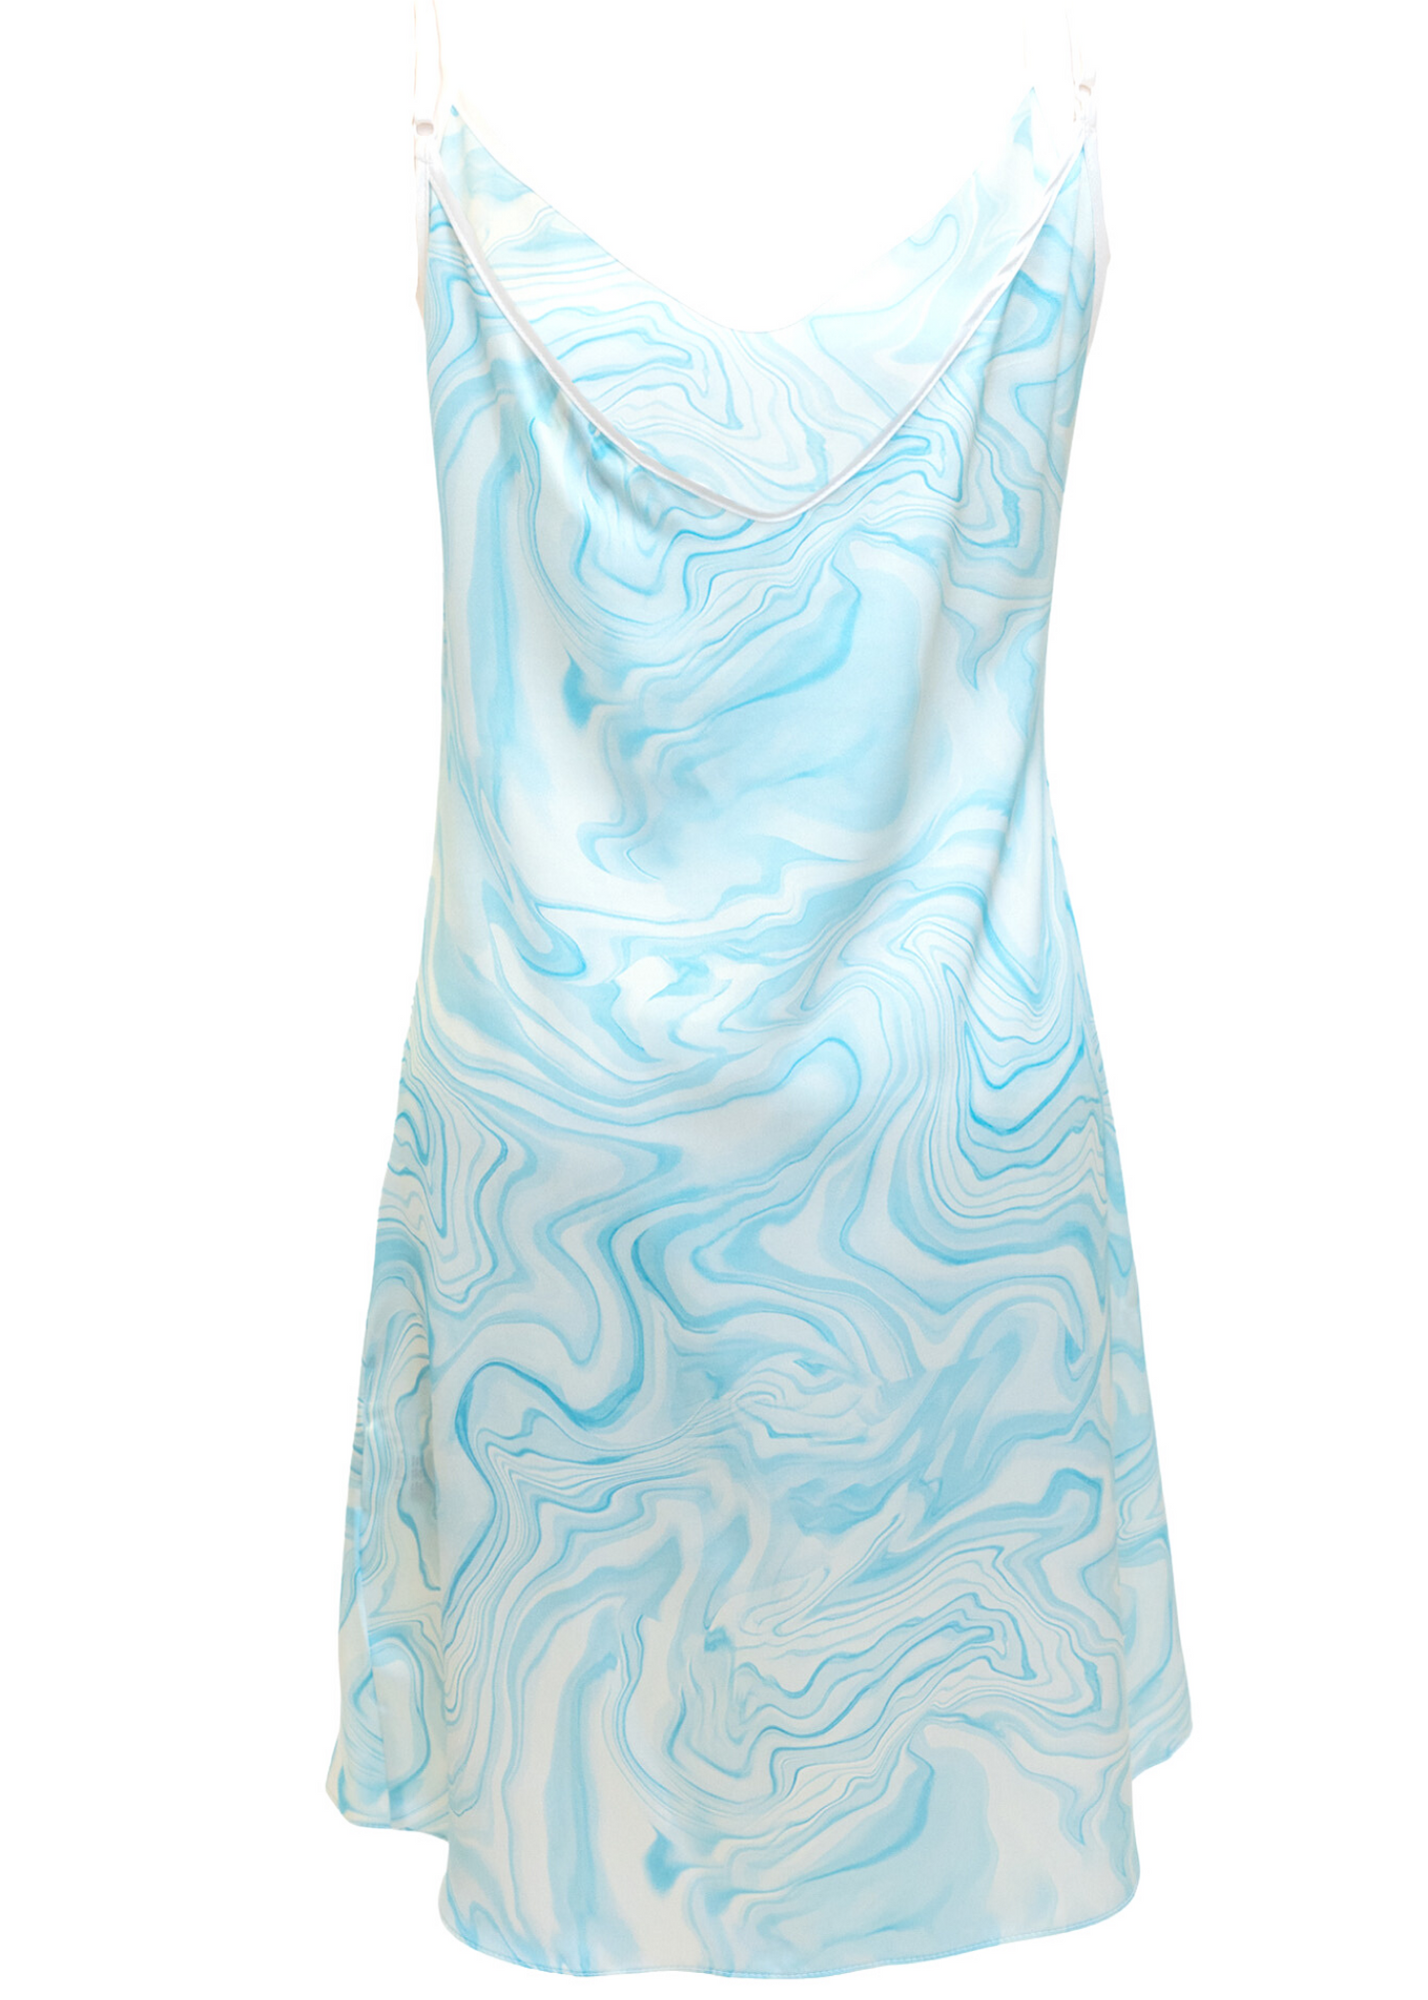 #15 Aqua Aura Geode Print Silk Slip Mini Dress - MEDIUM